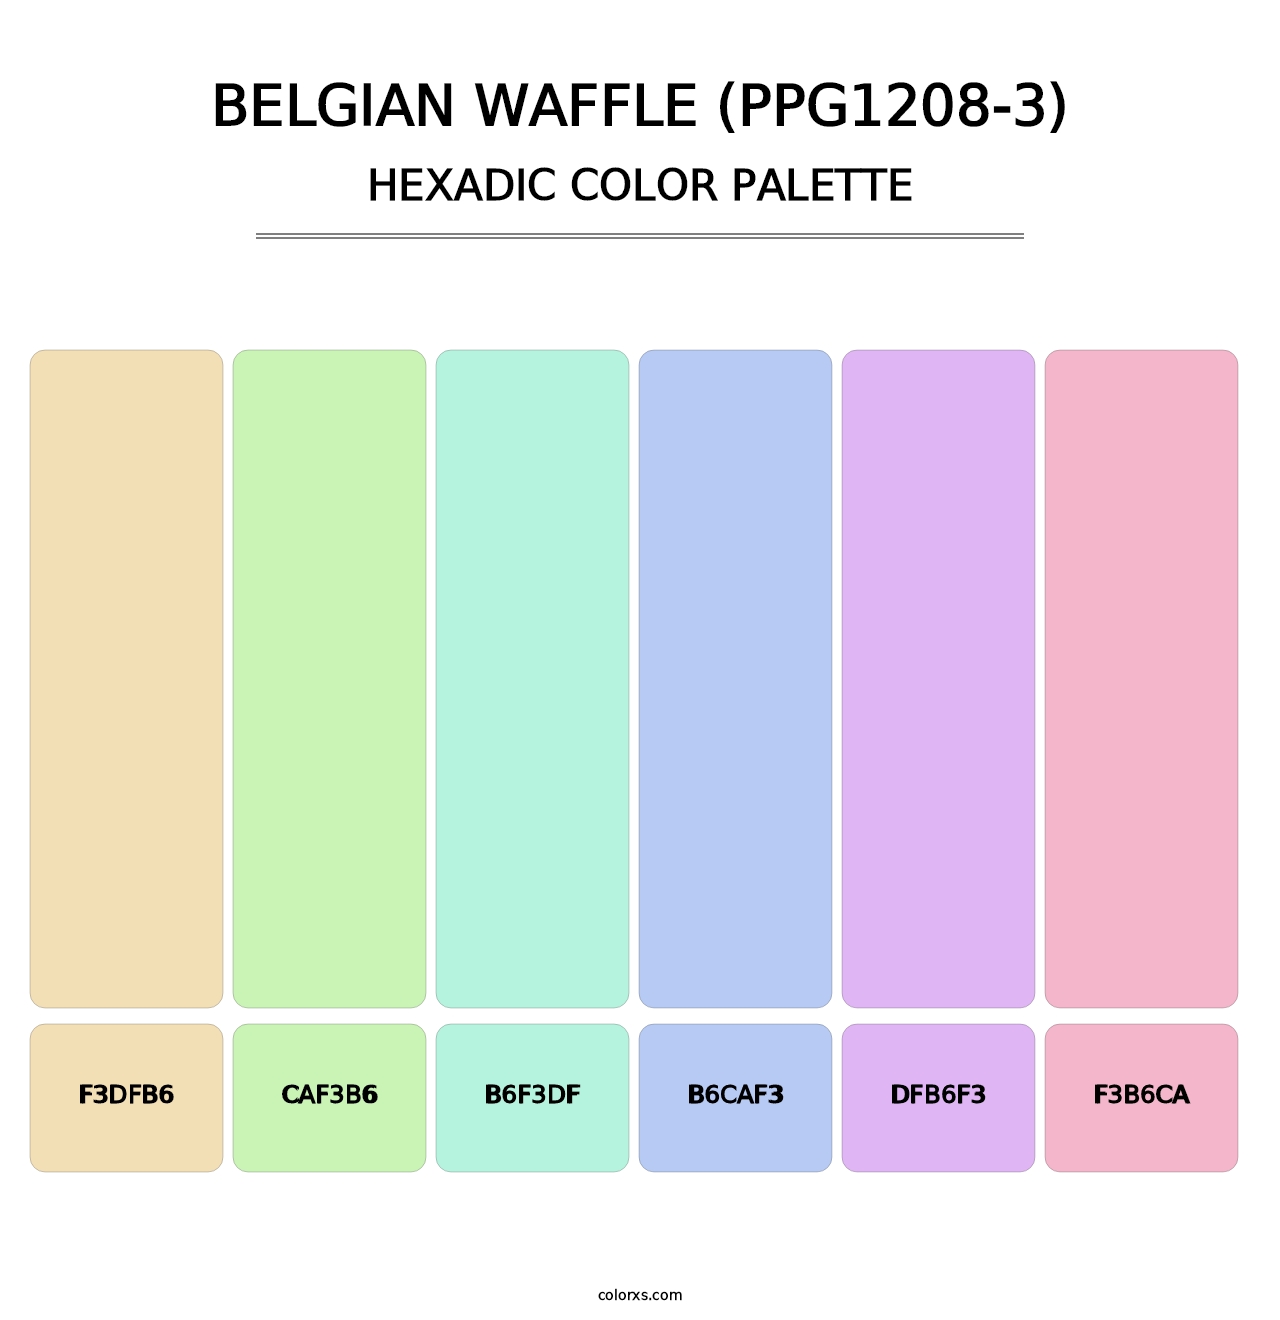 Belgian Waffle (PPG1208-3) - Hexadic Color Palette